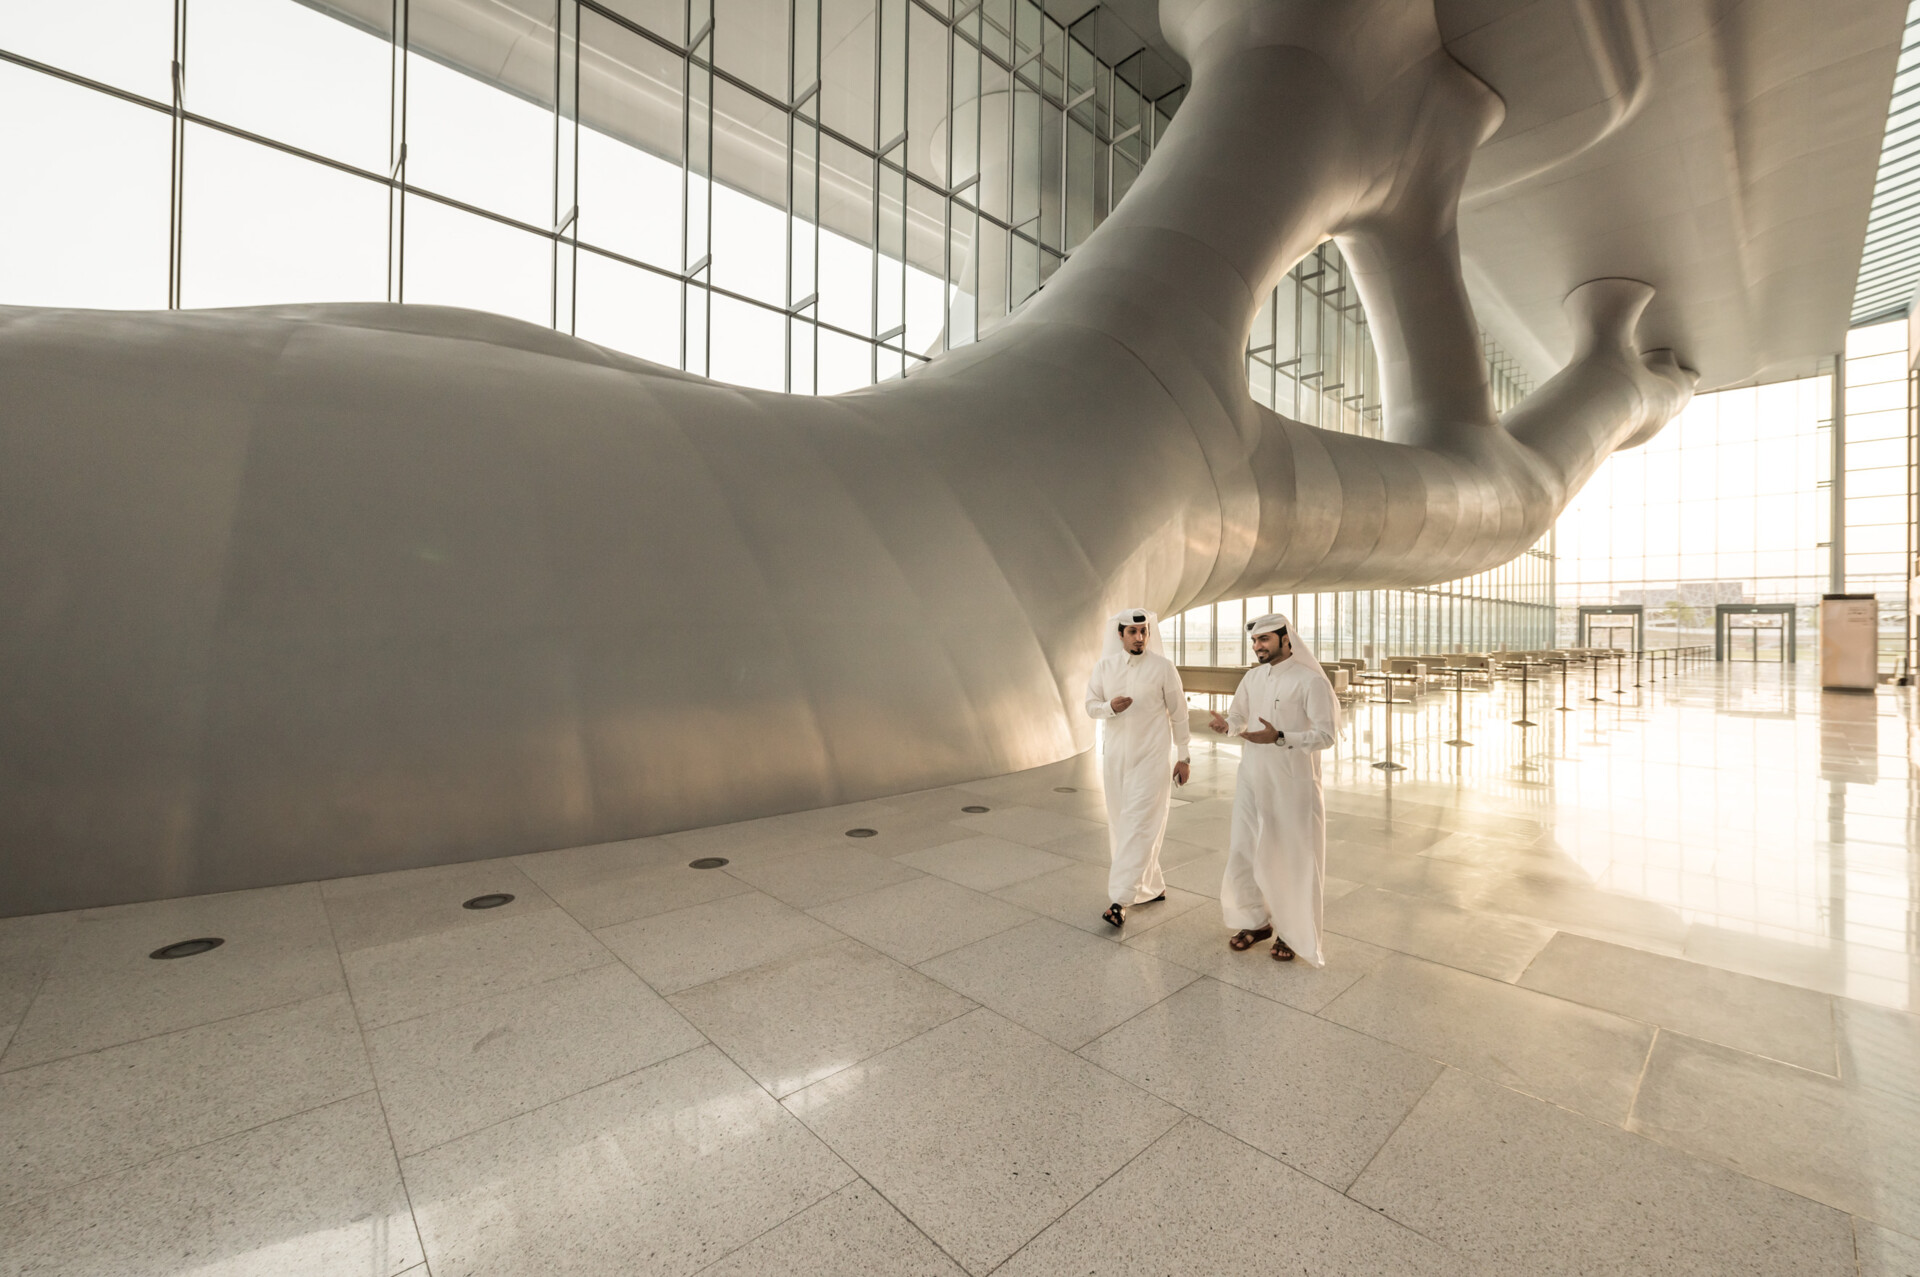 qatar tourism tenders